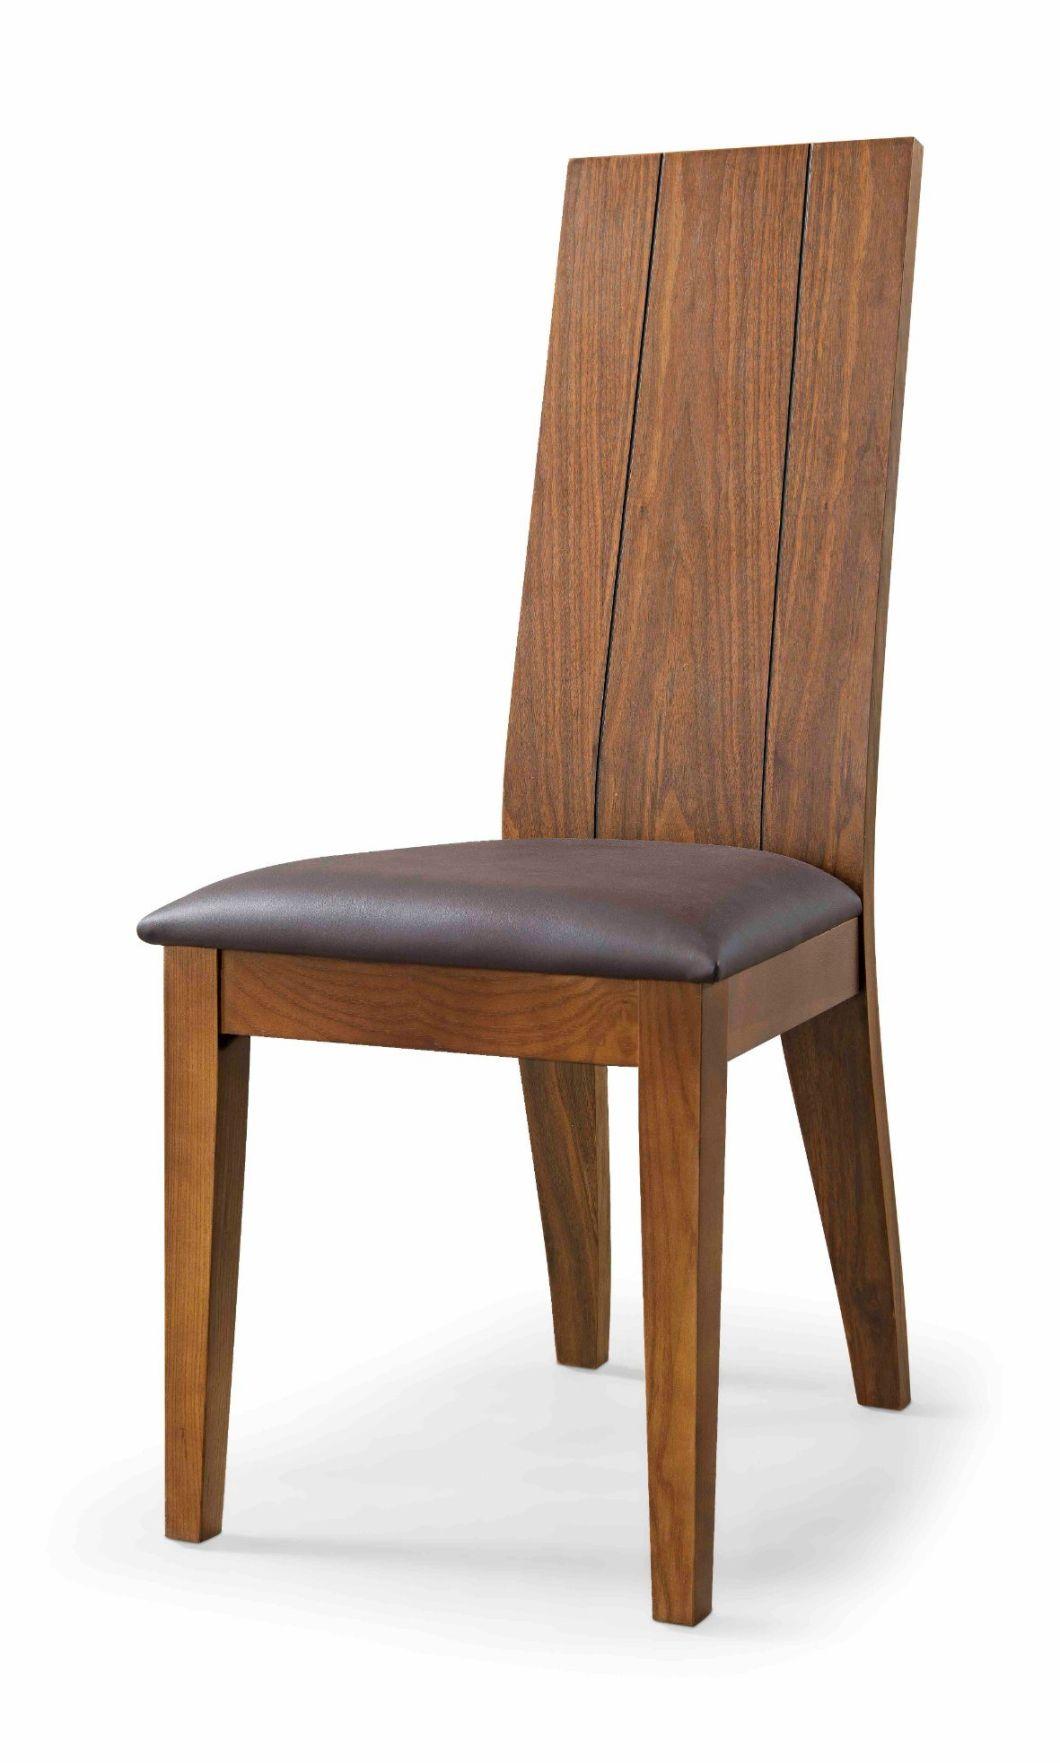 Hot Sale Modern Popular Home Furniture European Design Wood Dining Chair